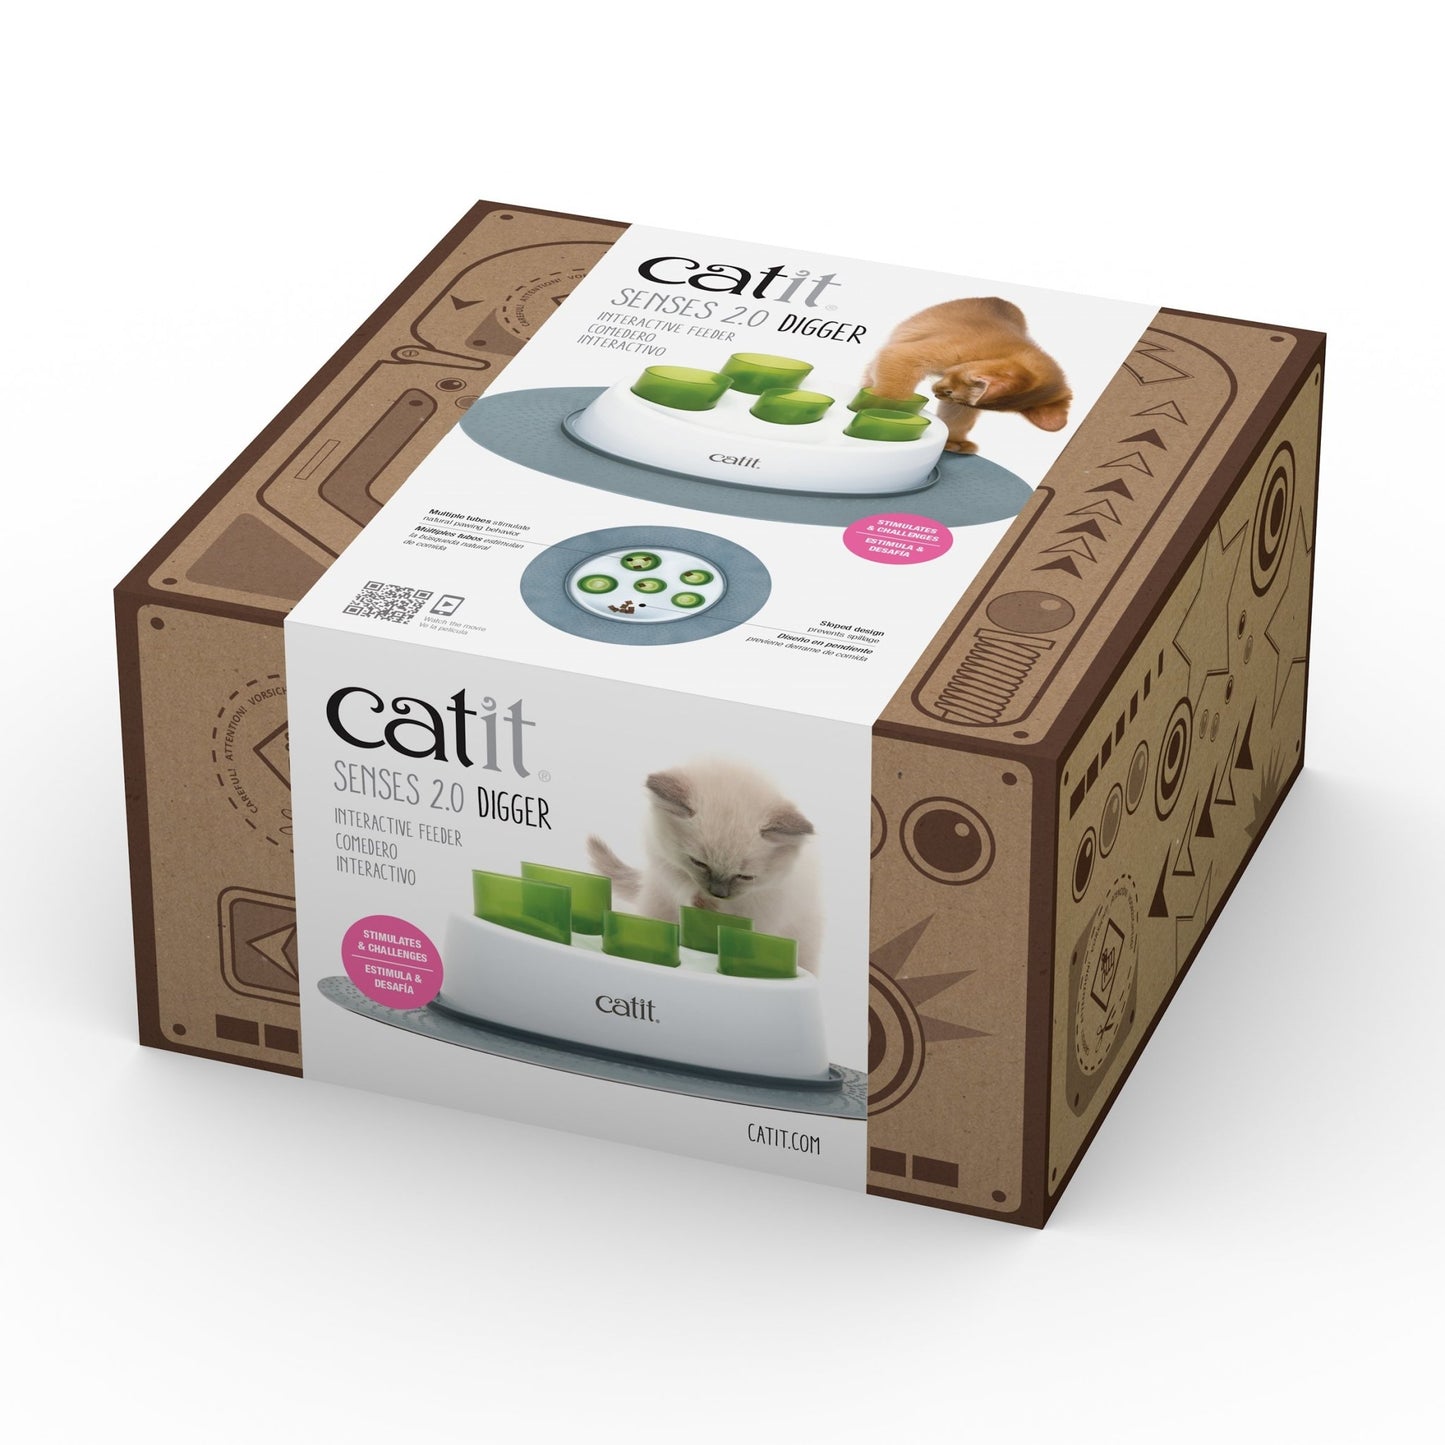 Catit 2.0 Senses Food Digger - Woonona Petfood & Produce